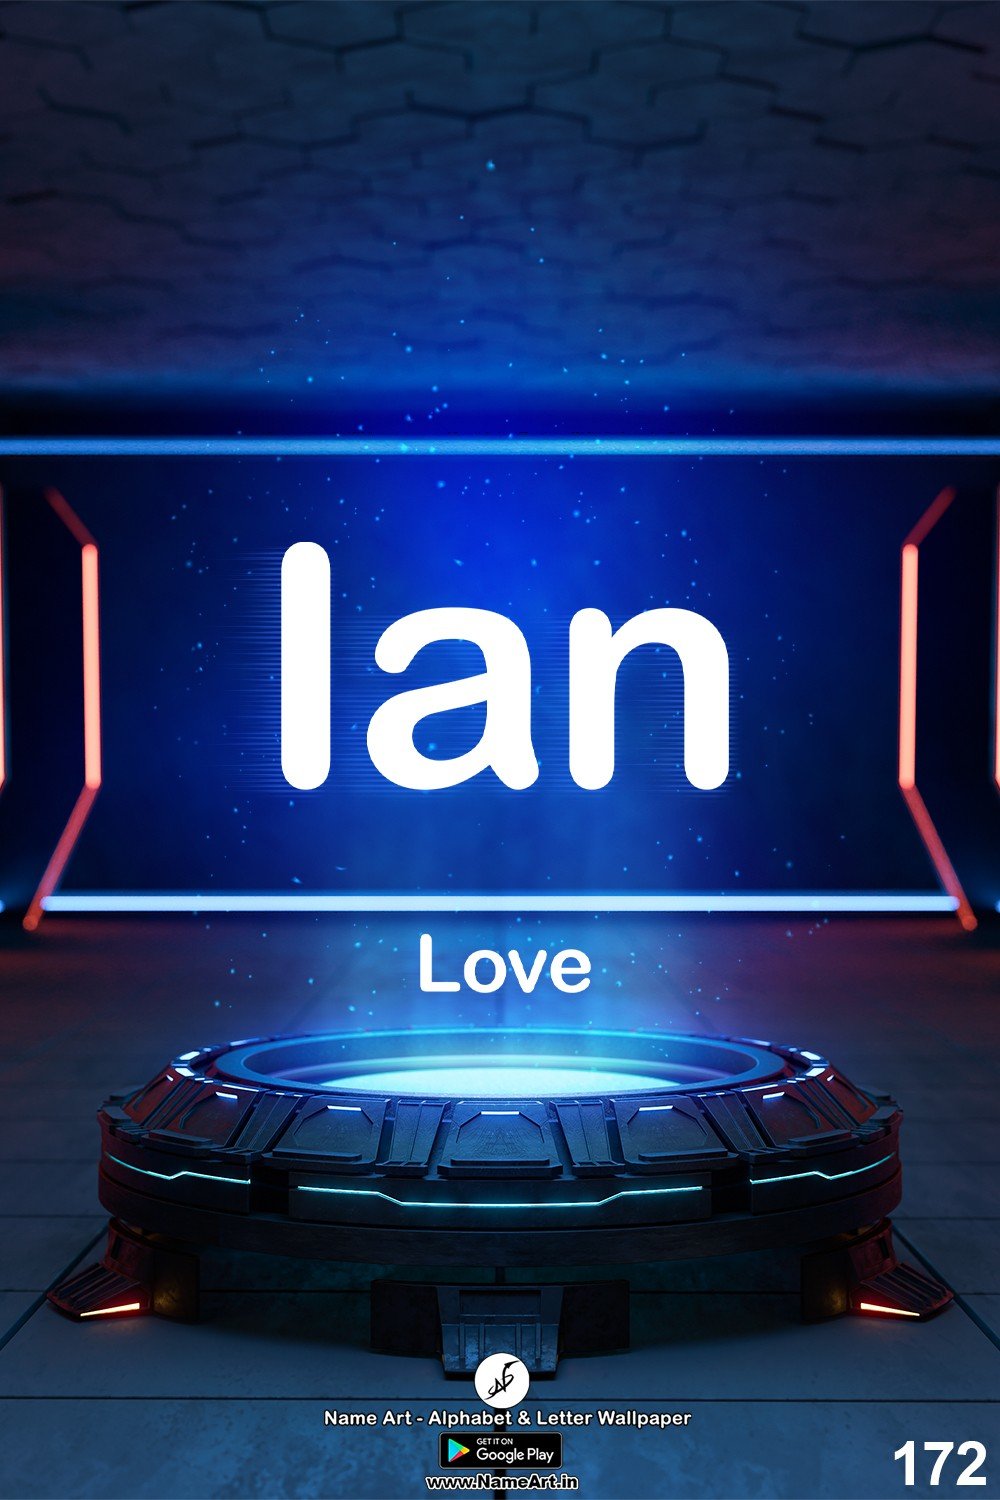 Ian | Whatsapp Status Ian | Happy Birthday Ian !! | New Whatsapp Status Ian Images |